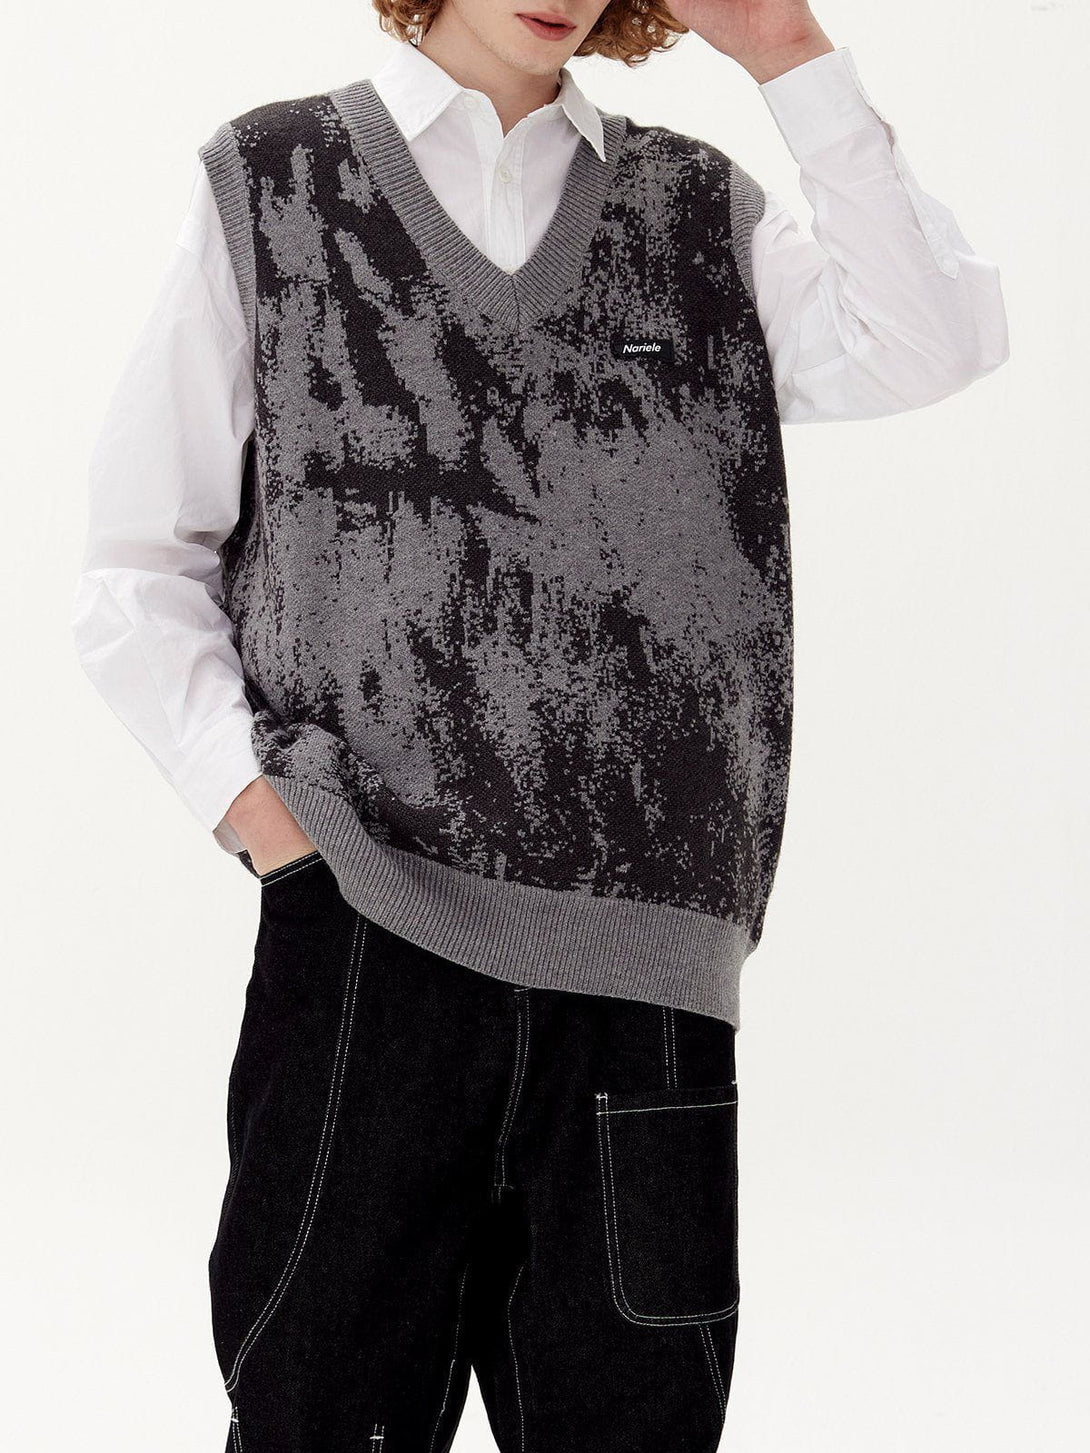 Majesda® - Tie Dye Jacquard Sweater Vest outfit ideas streetwear fashion